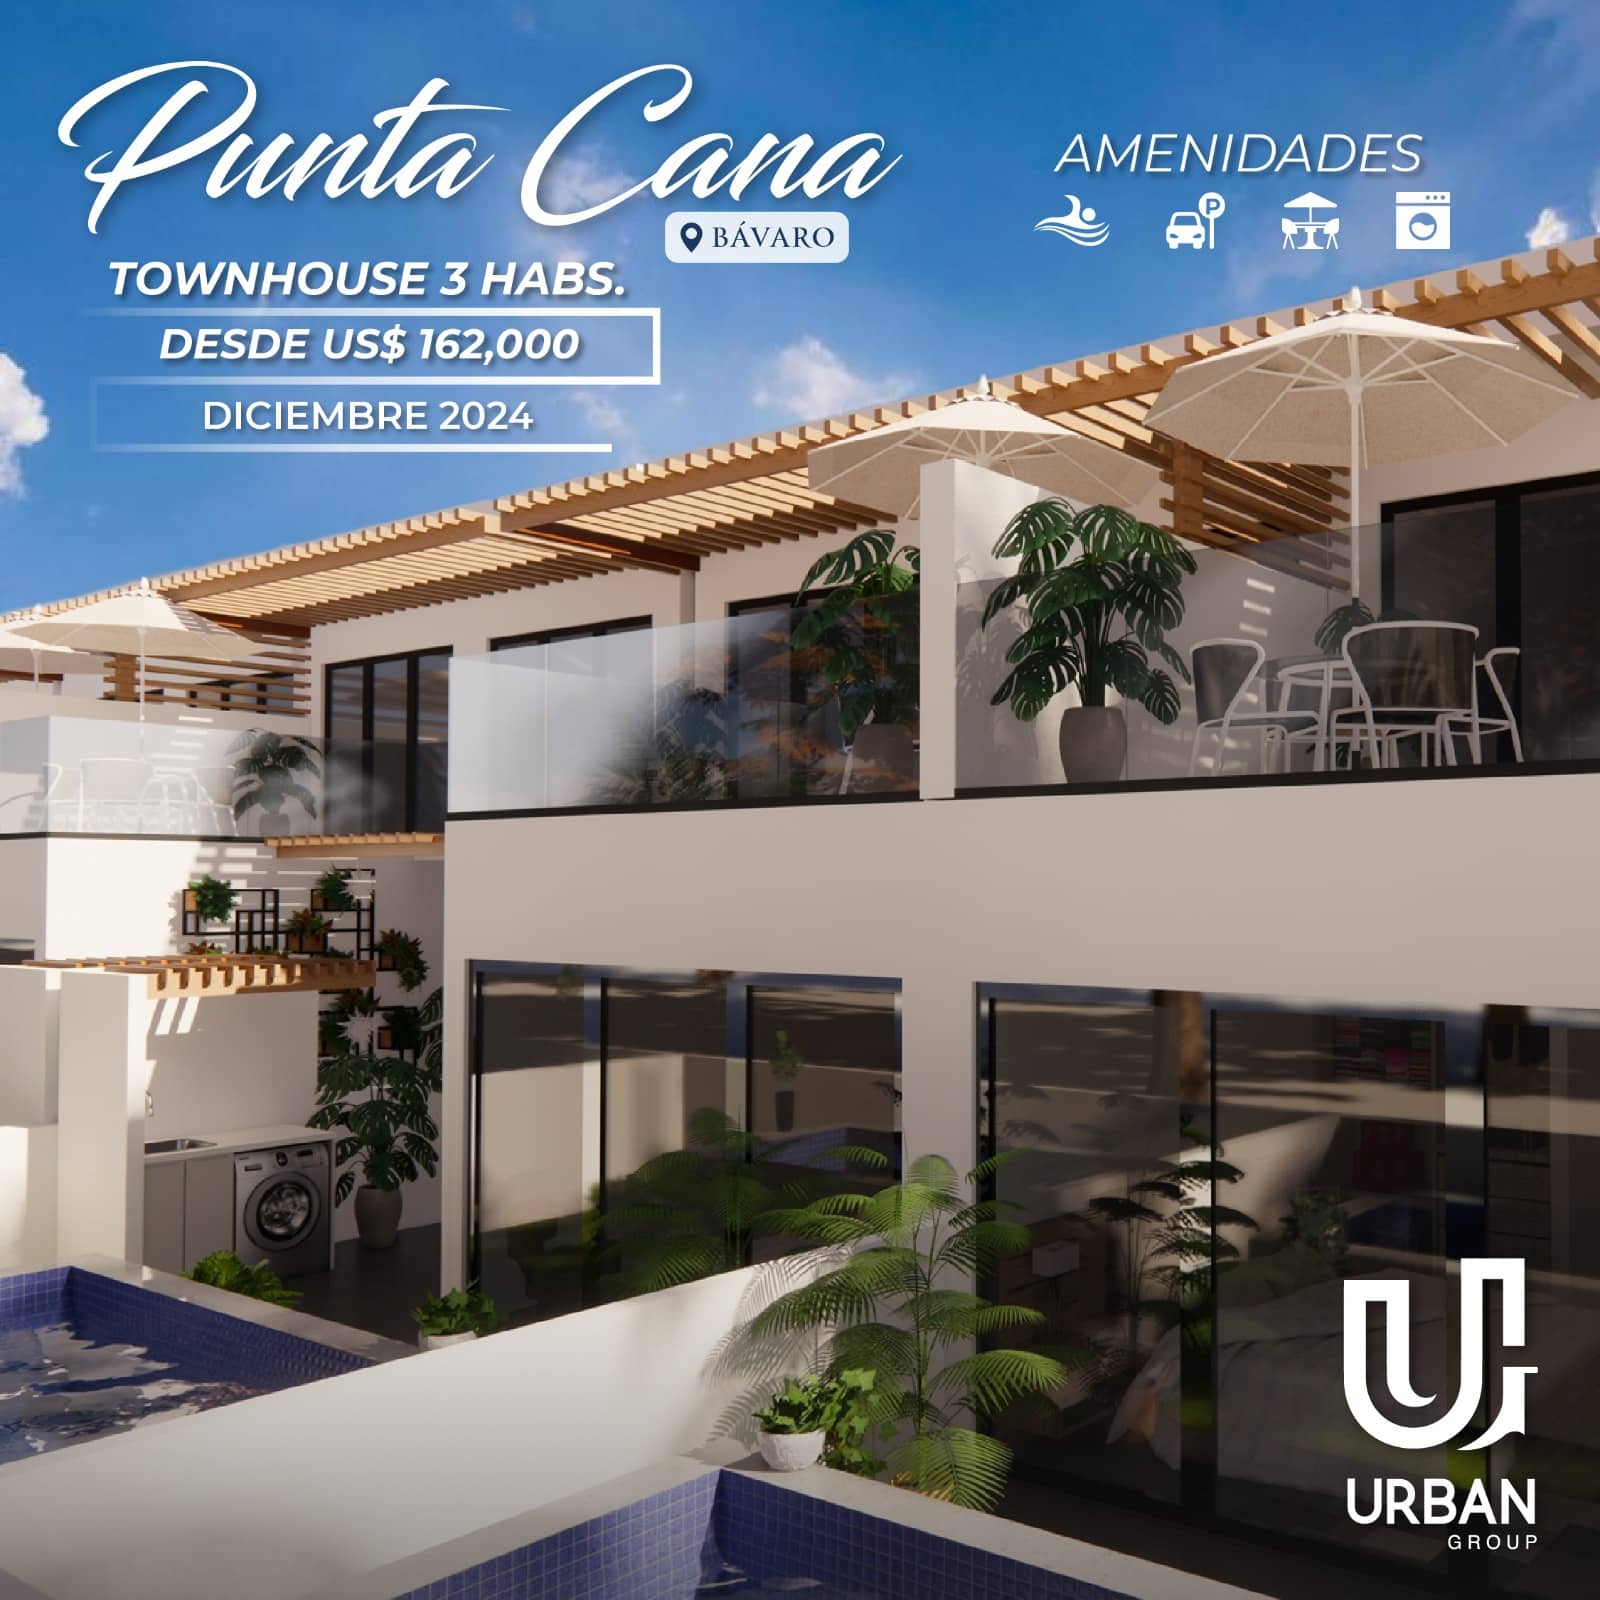 Townhouses 3 Habitaciones Desde US$162,000 Punta Cana